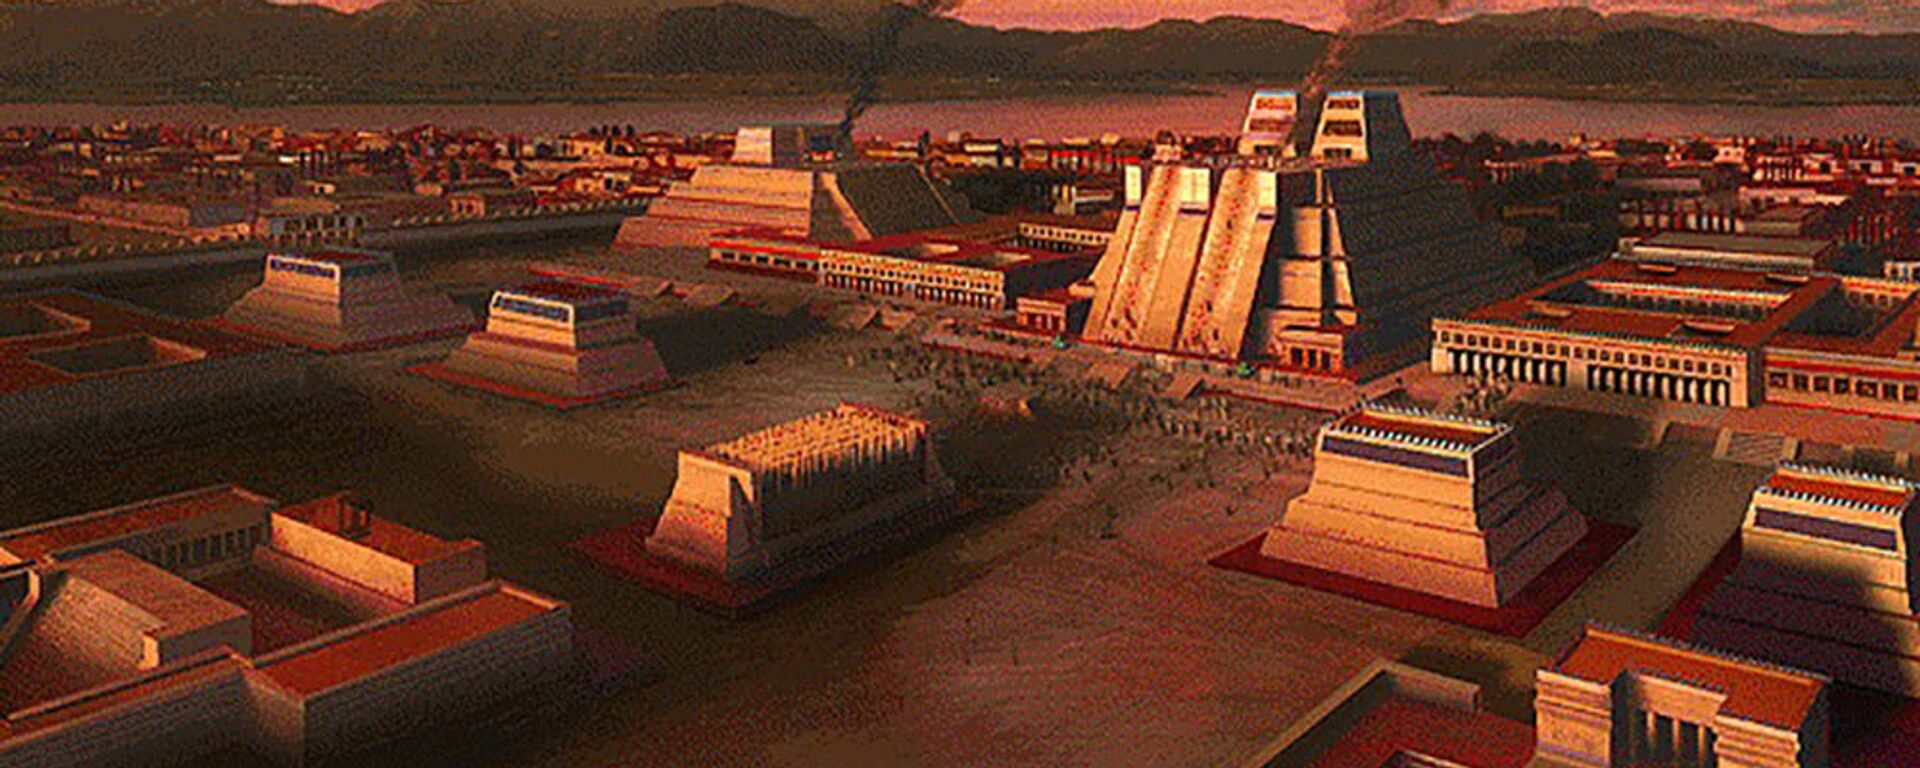 Tenochtitlán, capital del Imperio mexica - Sputnik Mundo, 1920, 23.05.2020